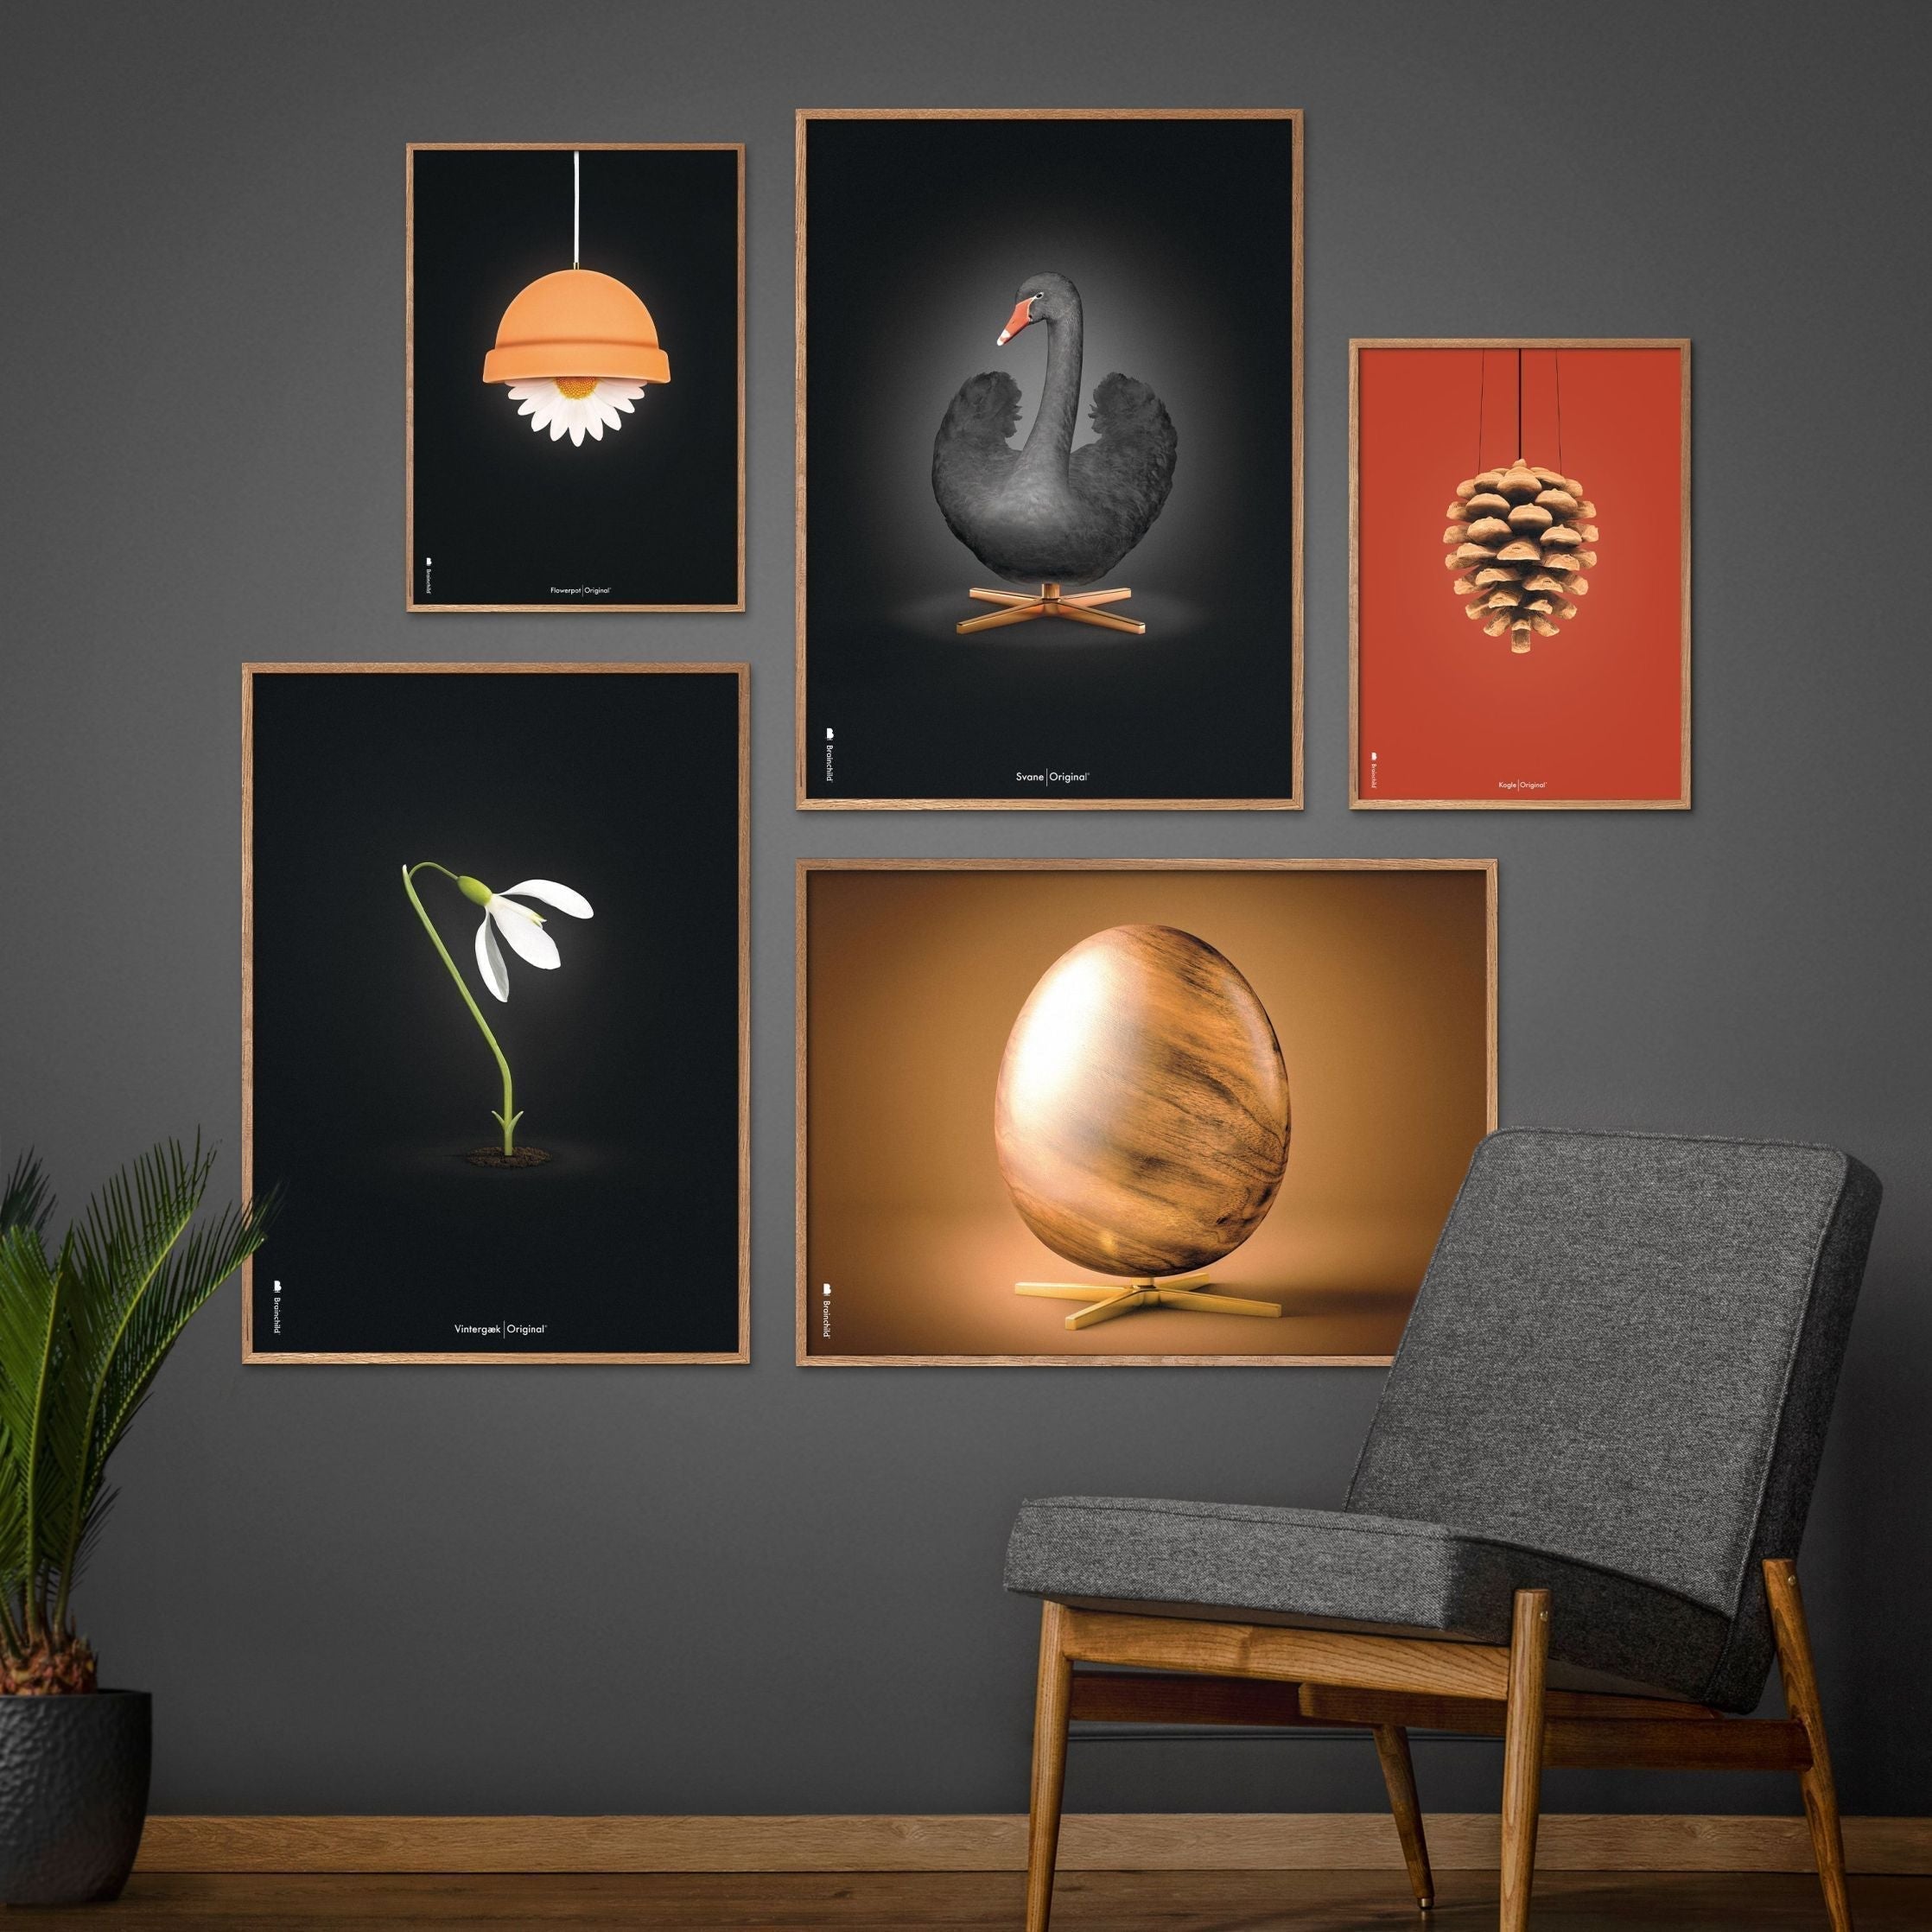 brainchild Eierkruisformaat Poster, frame gemaakt van donker hout 50x70 cm, bruin